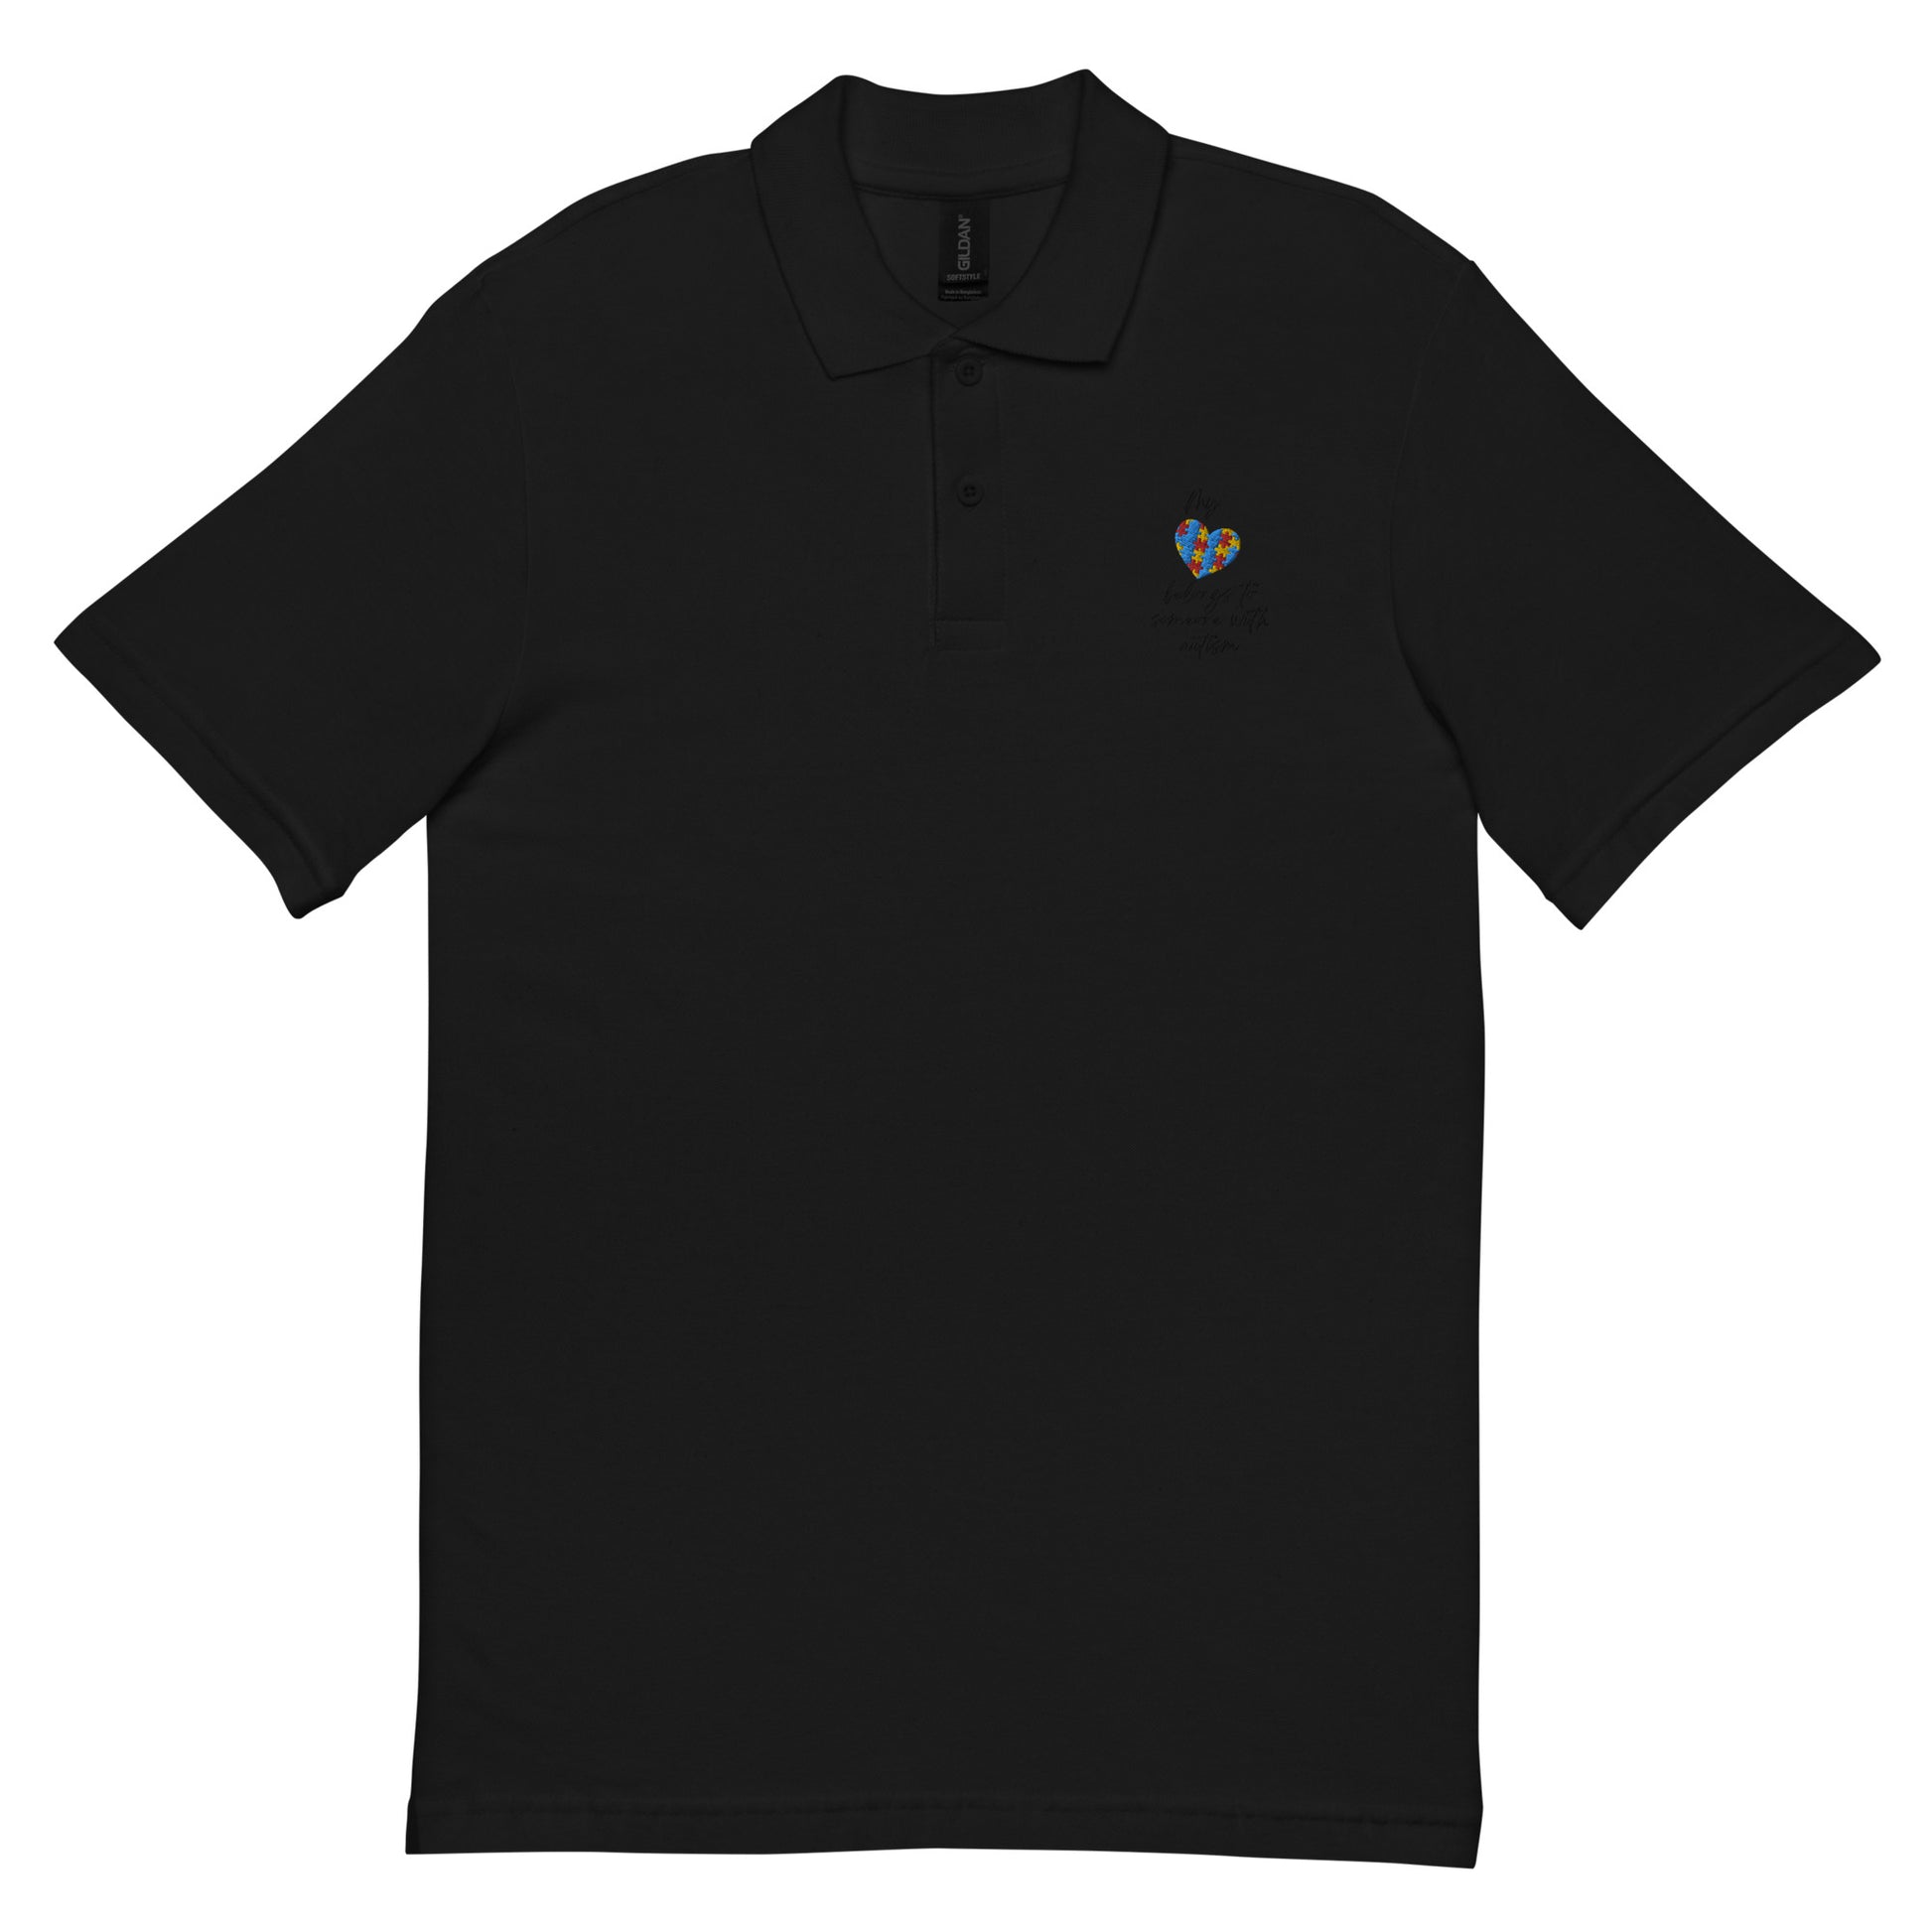 Unisex pique polo shirt - Autism Awareness Polo Shirt Stylin' Spirit Black S 